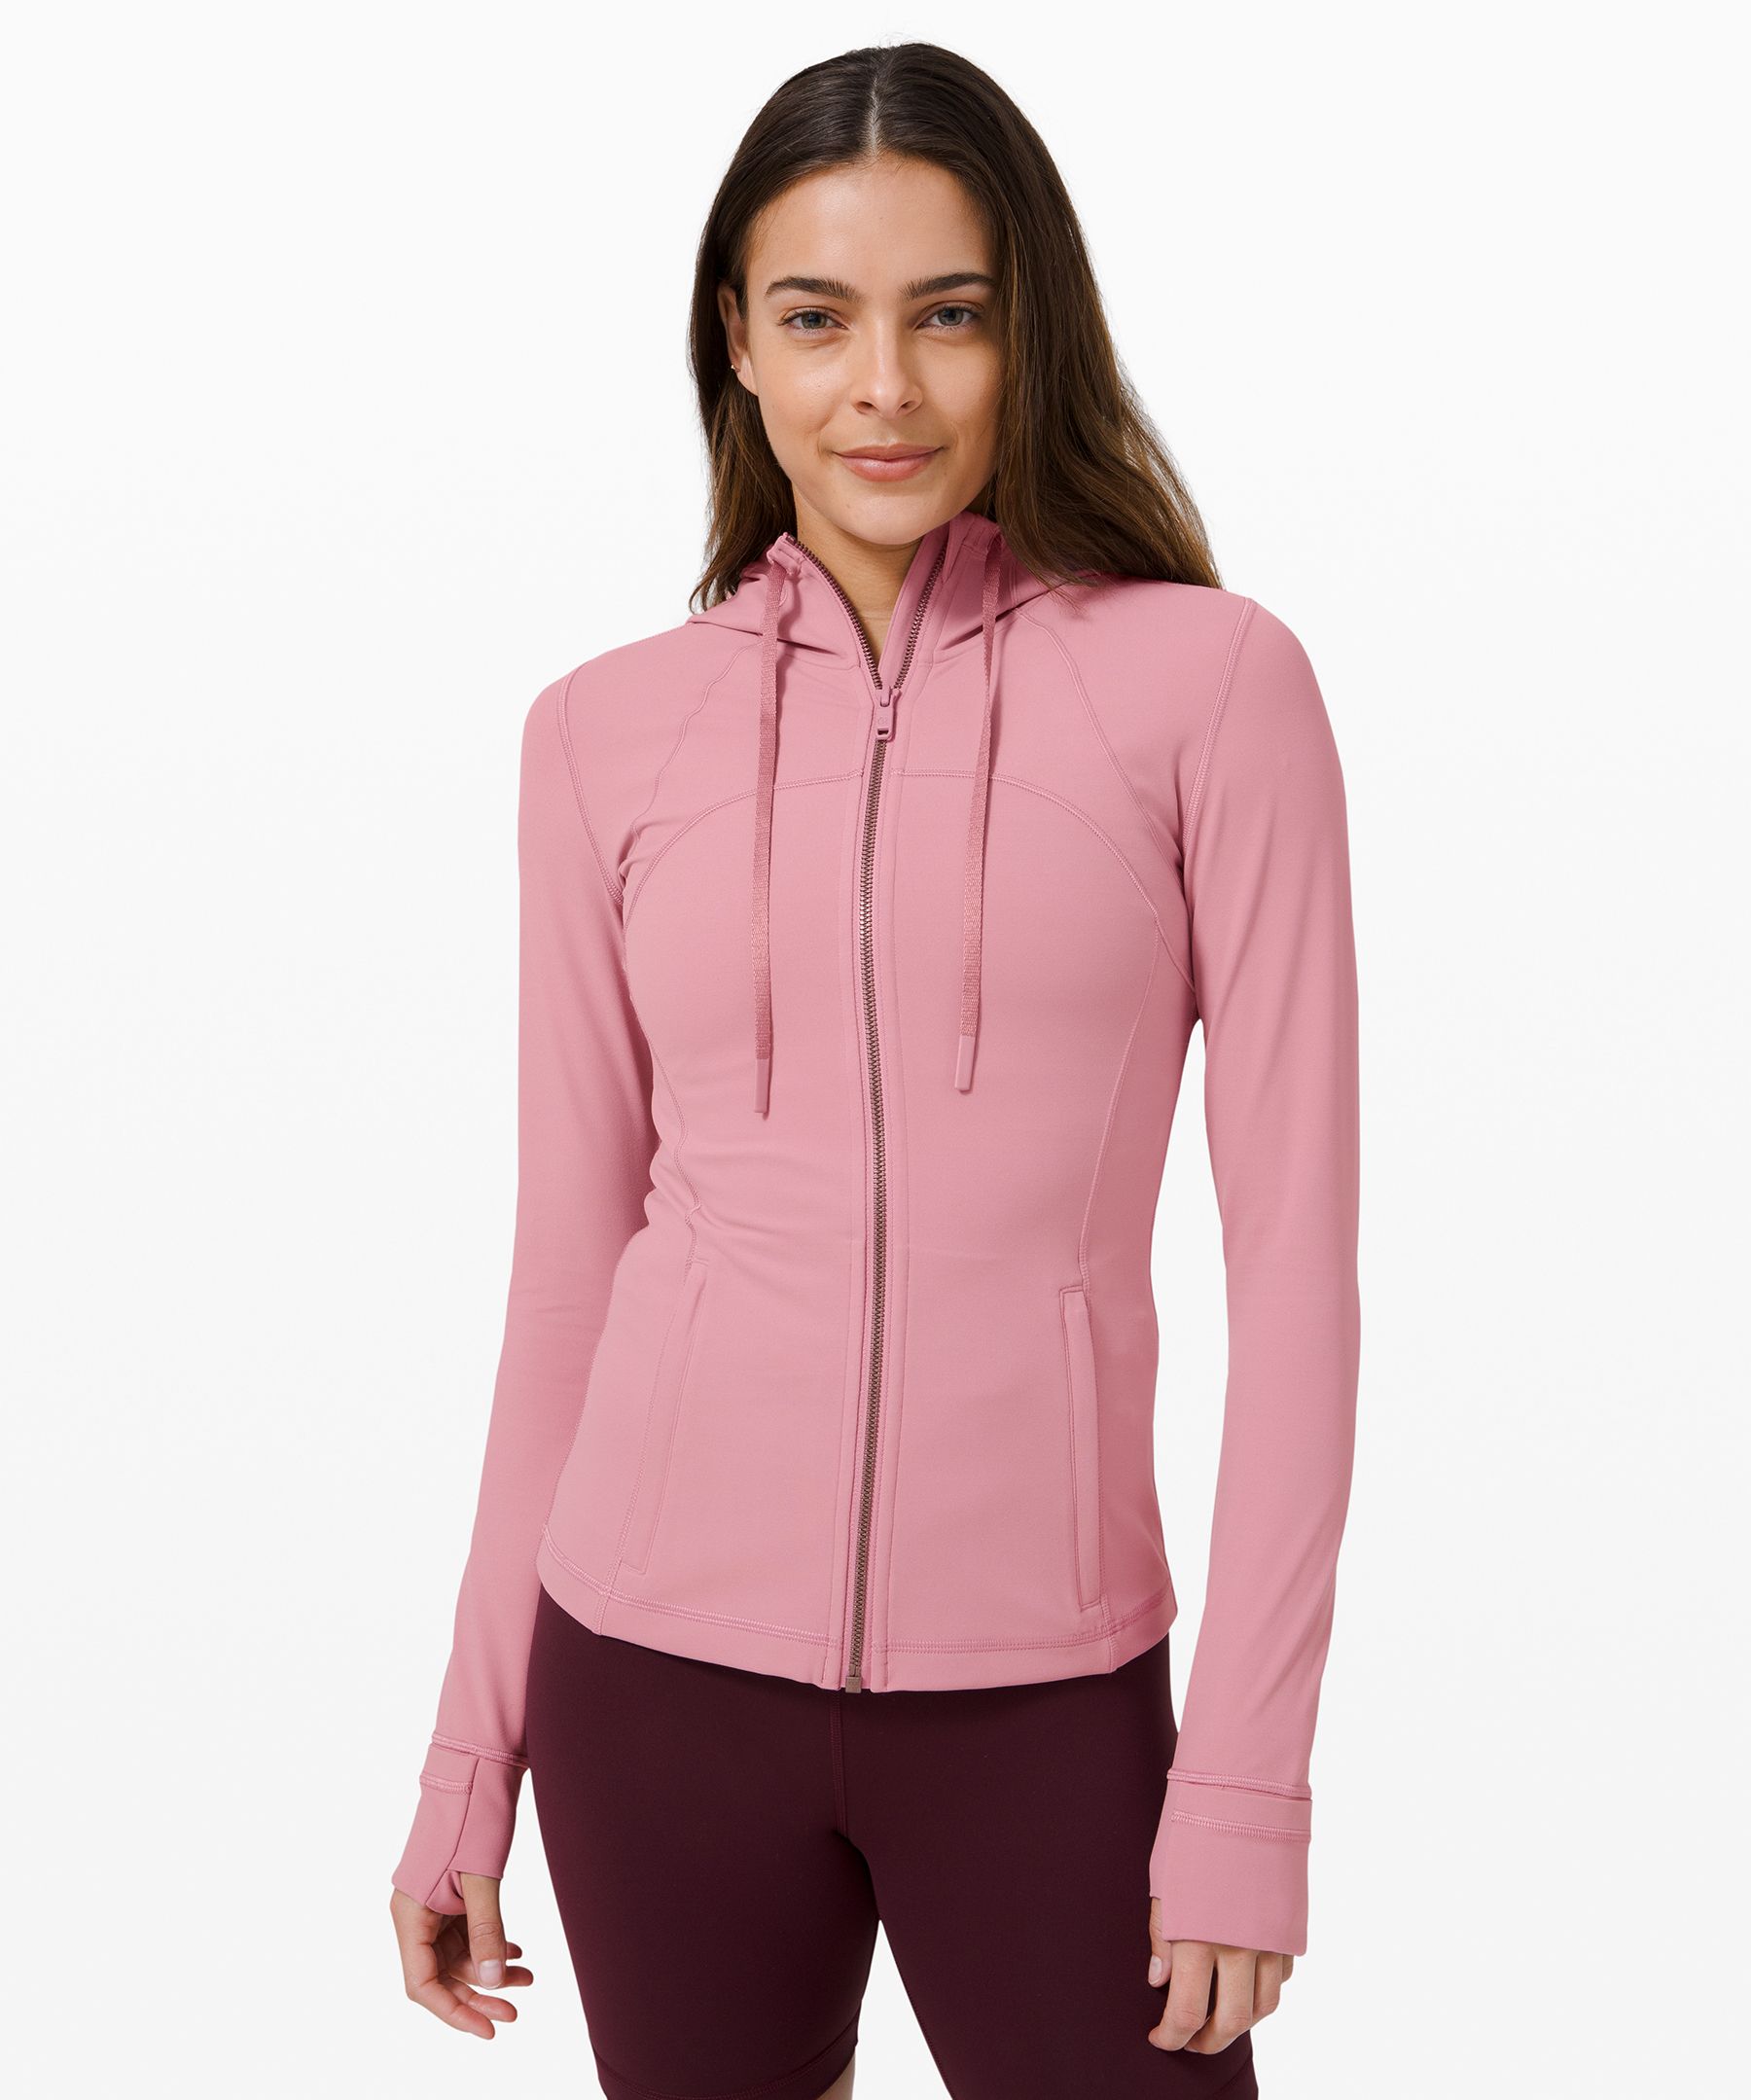 lululemon jacket pink